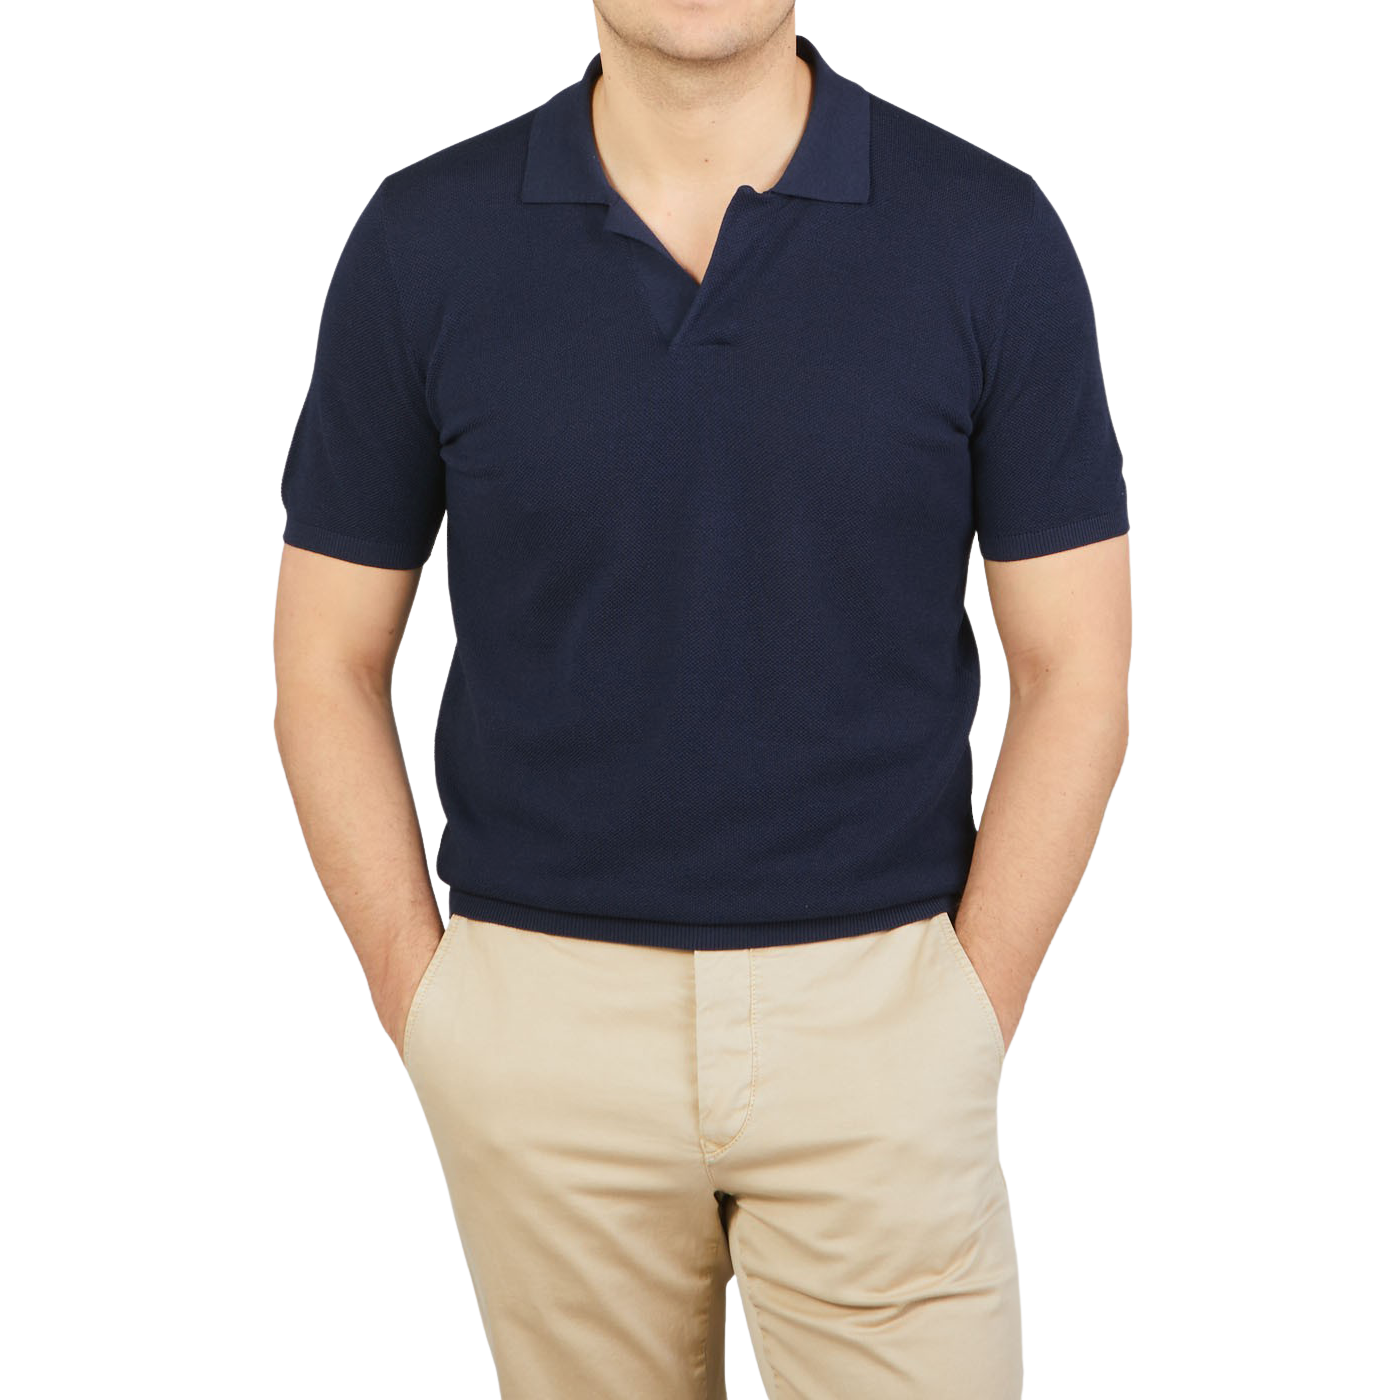 Mauro Ottaviani Navy Blue Cotton Silk Polo Shirt Front